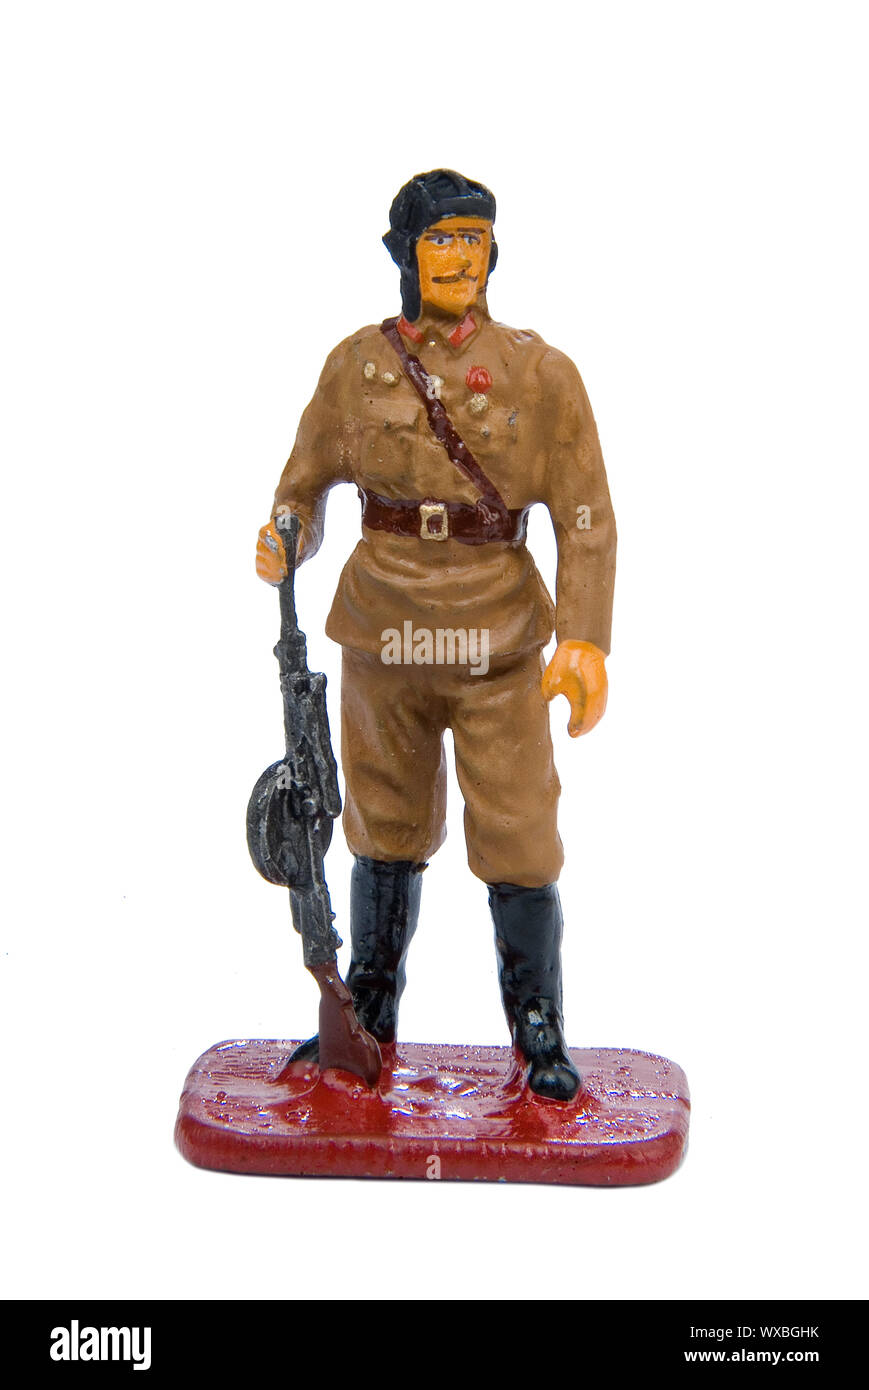 Toy Soldier Banque D'Images